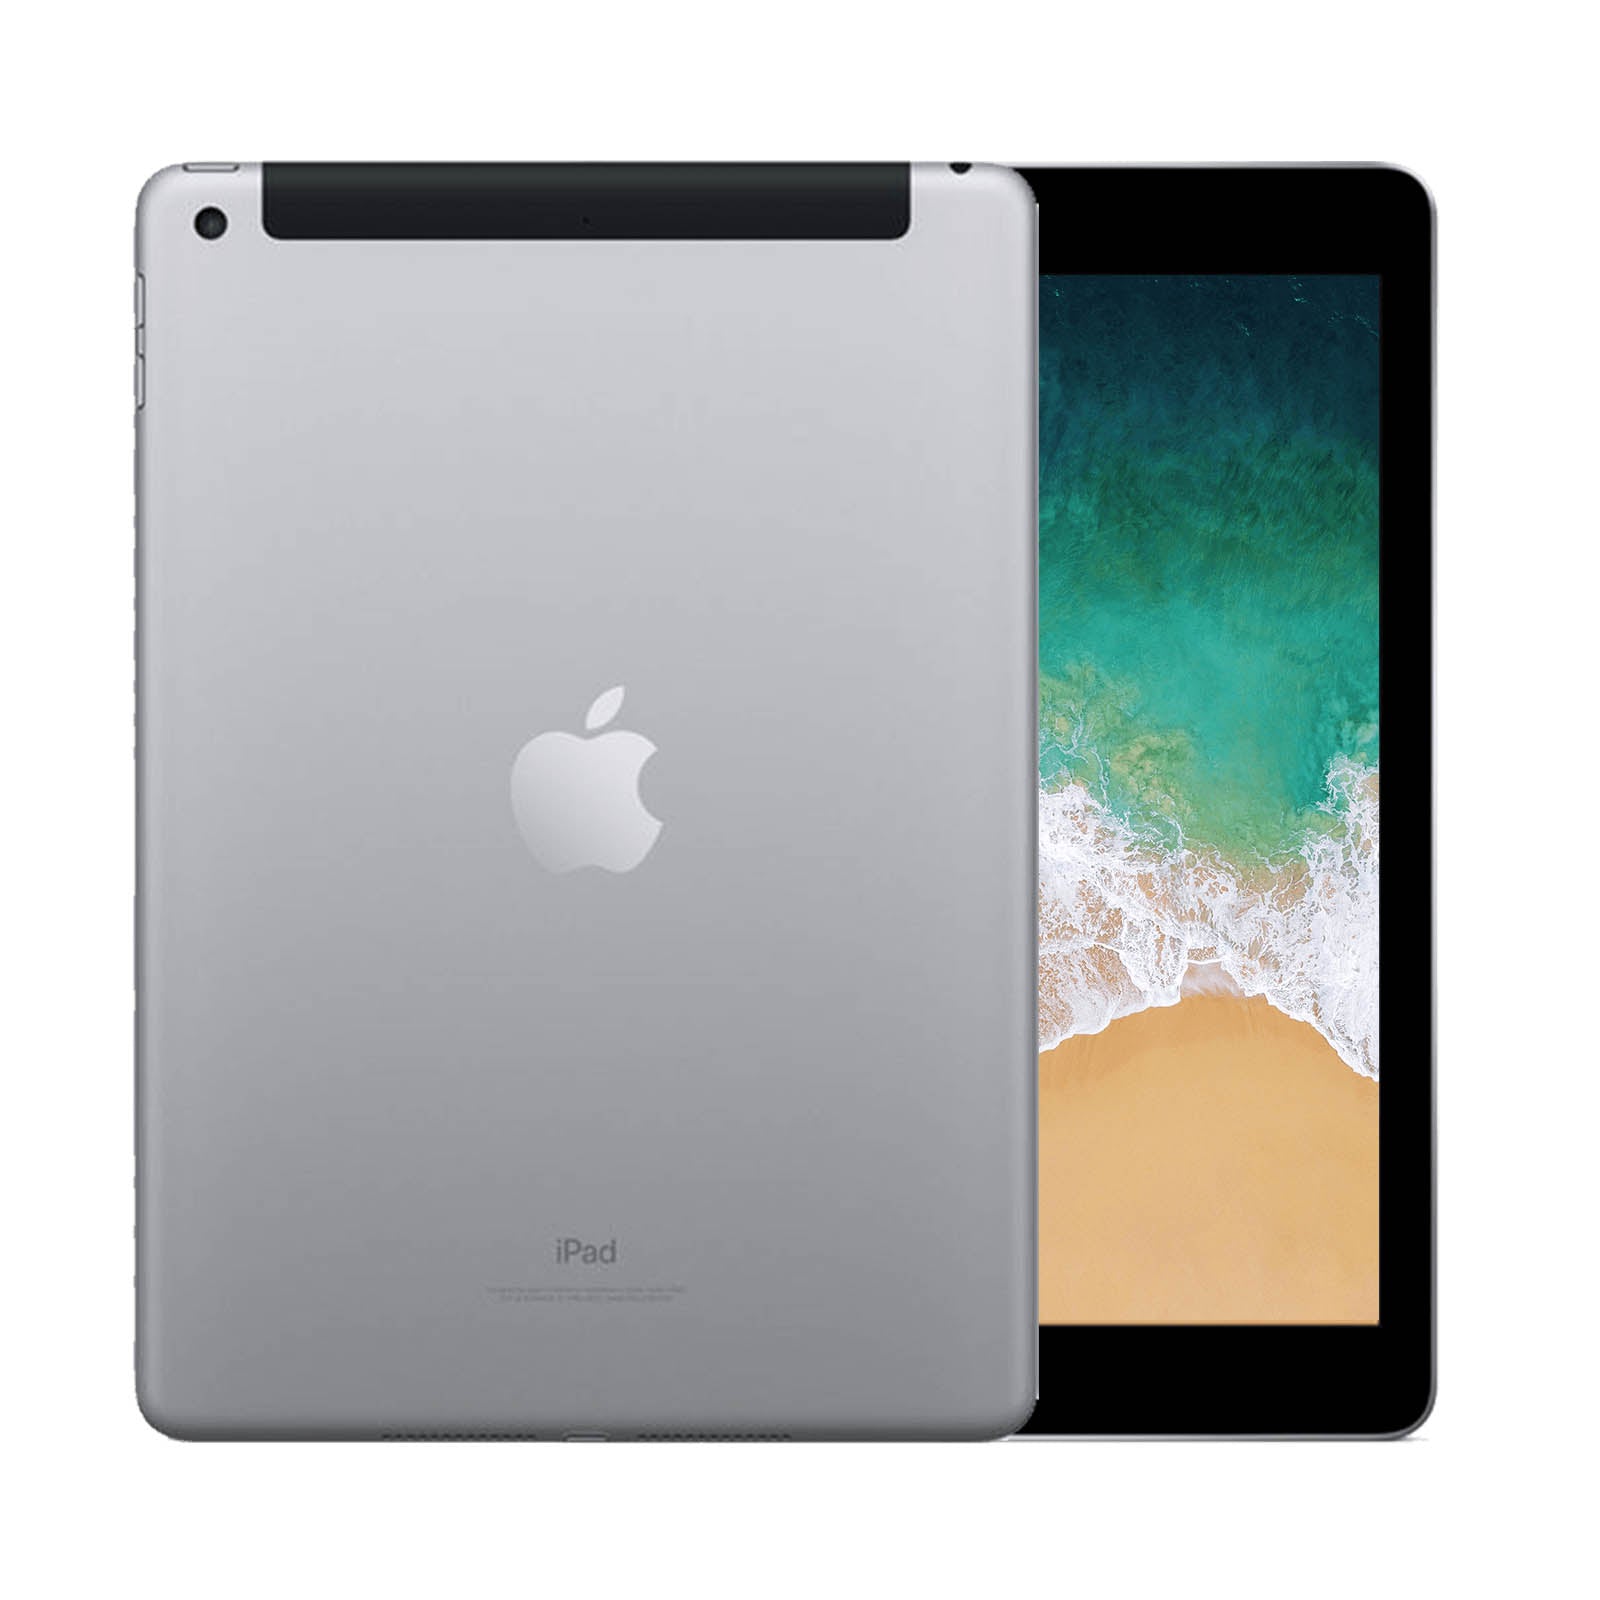 Apple iPad 5 32GB WiFi & Cellular Space Grey 32GB Space Grey Very Good